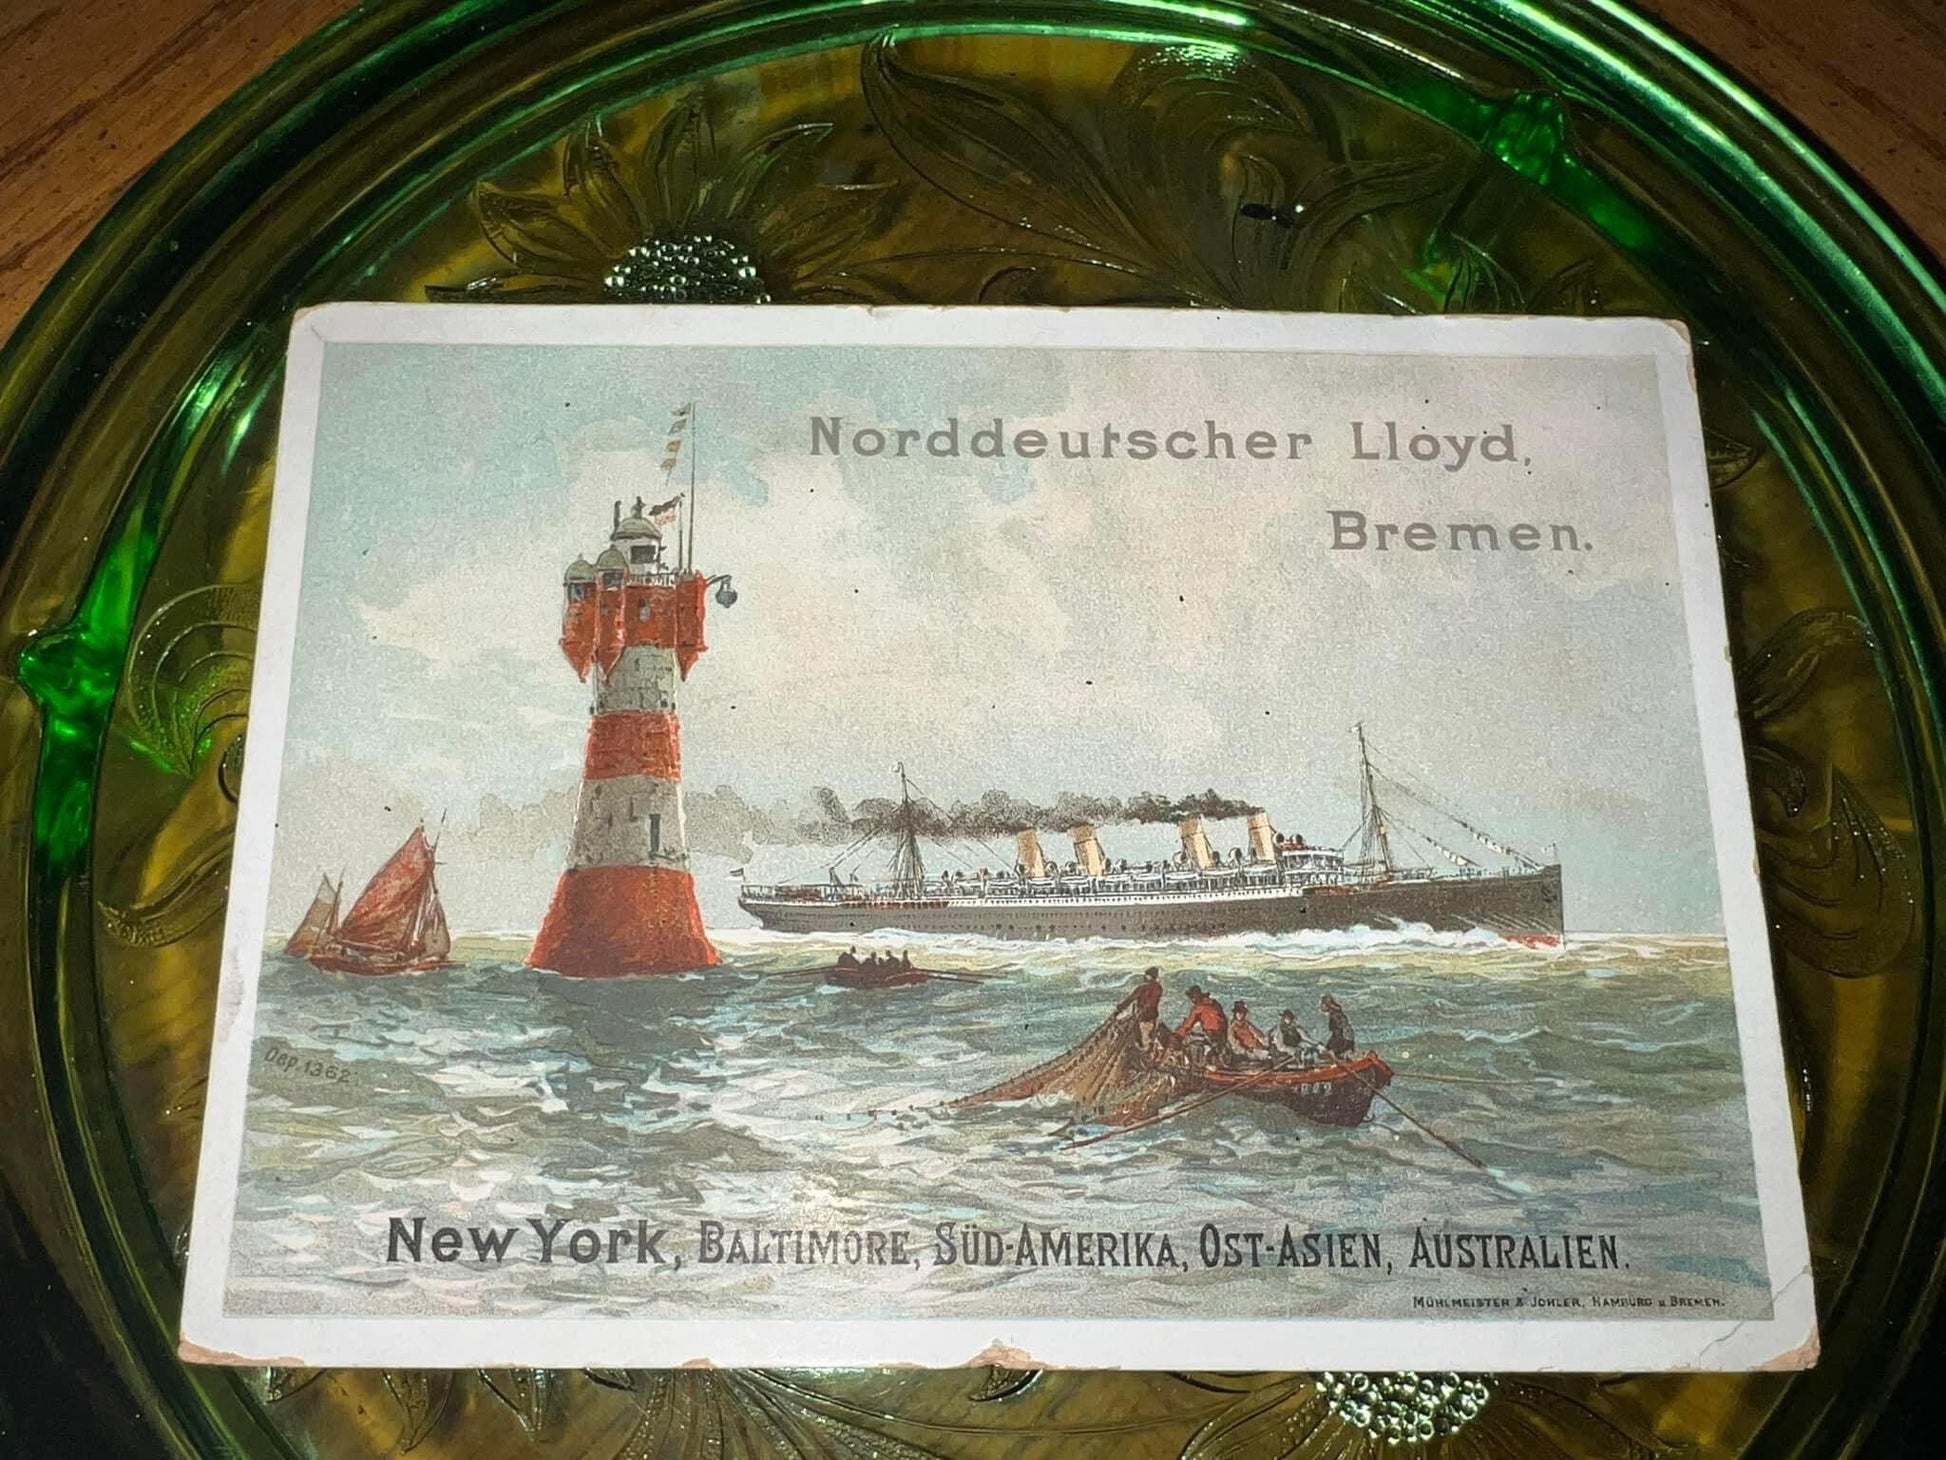 Antique Victorian 1880s Scarce Traveling steamship trade card advertisement Norddeutscher Lloyd brenen steam ship company